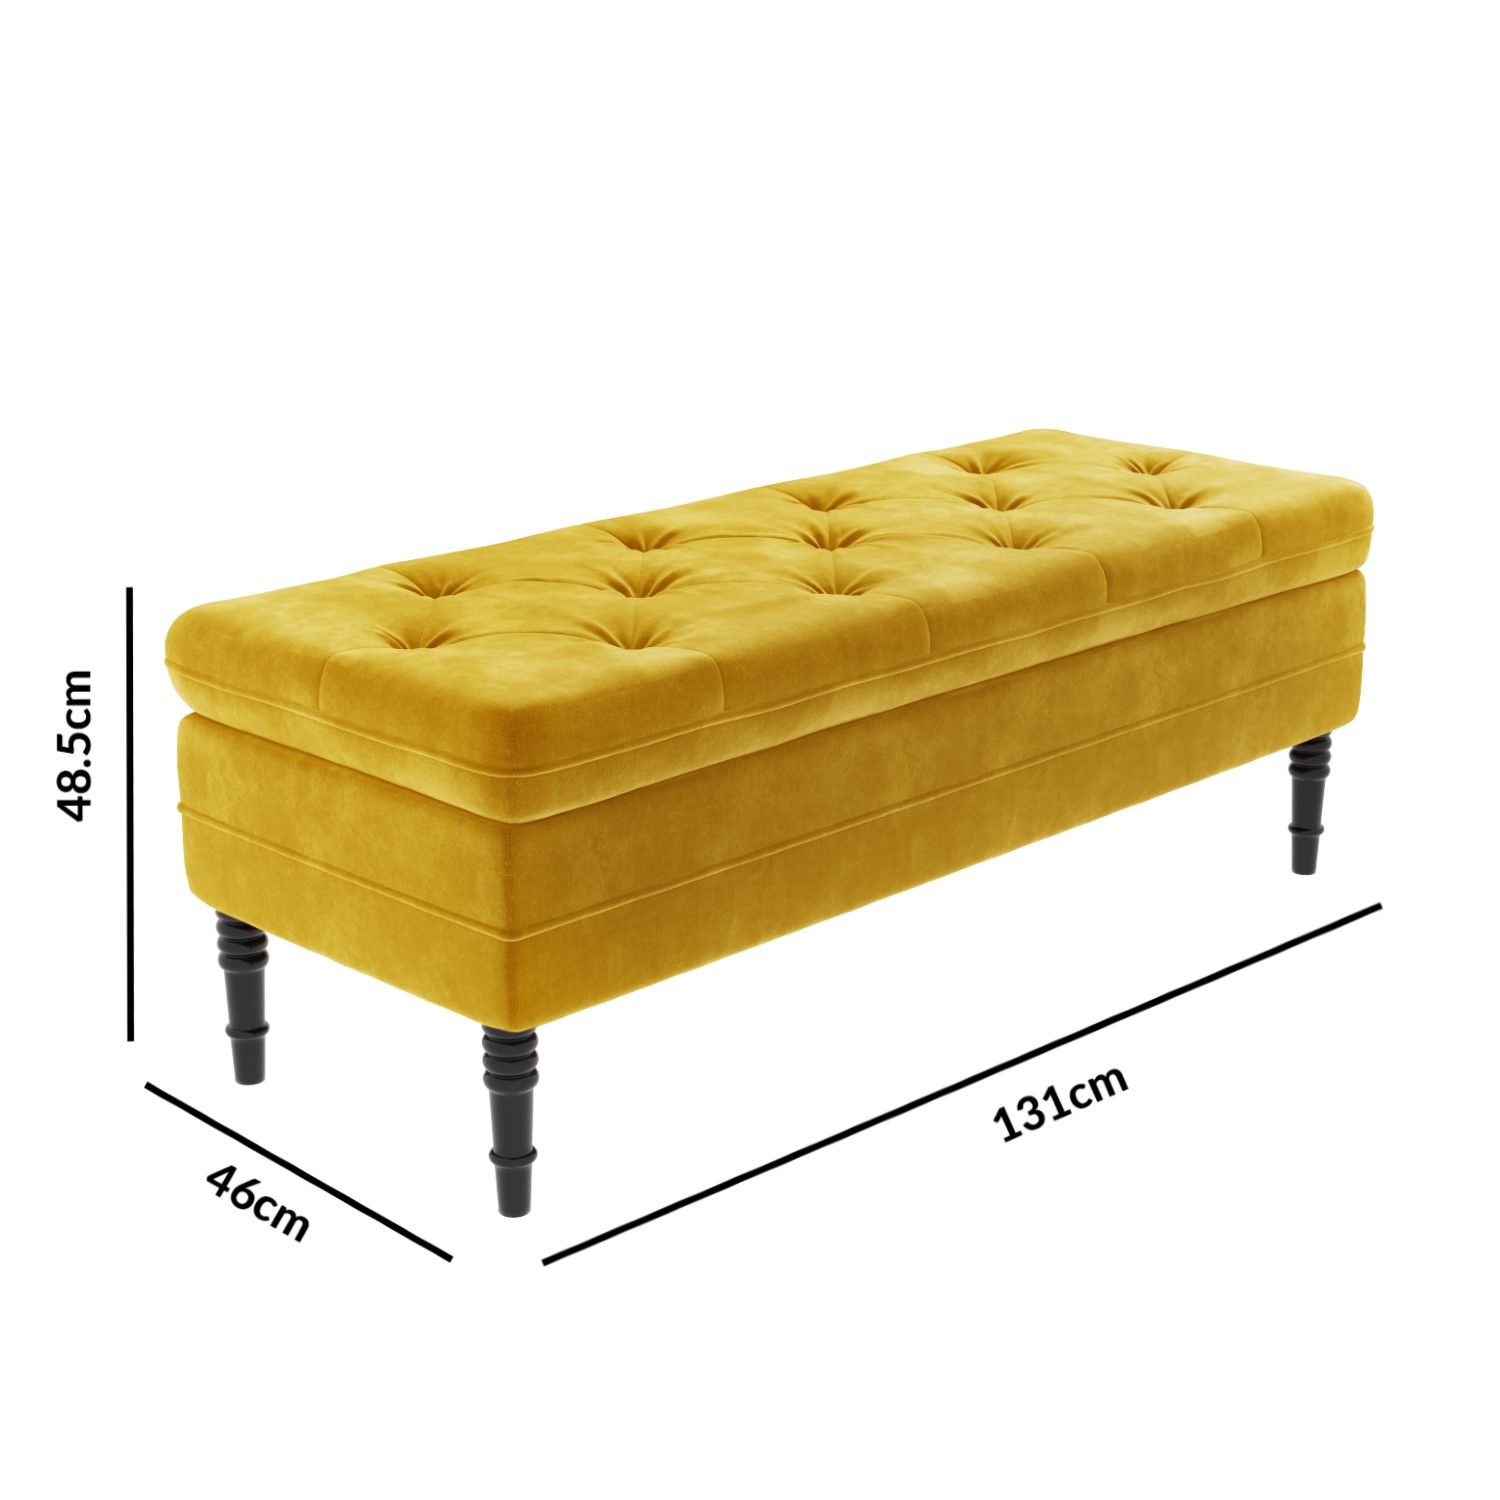 Yellow Velvet Ottoman Storage Bench With Button Detail Safina Furniture123